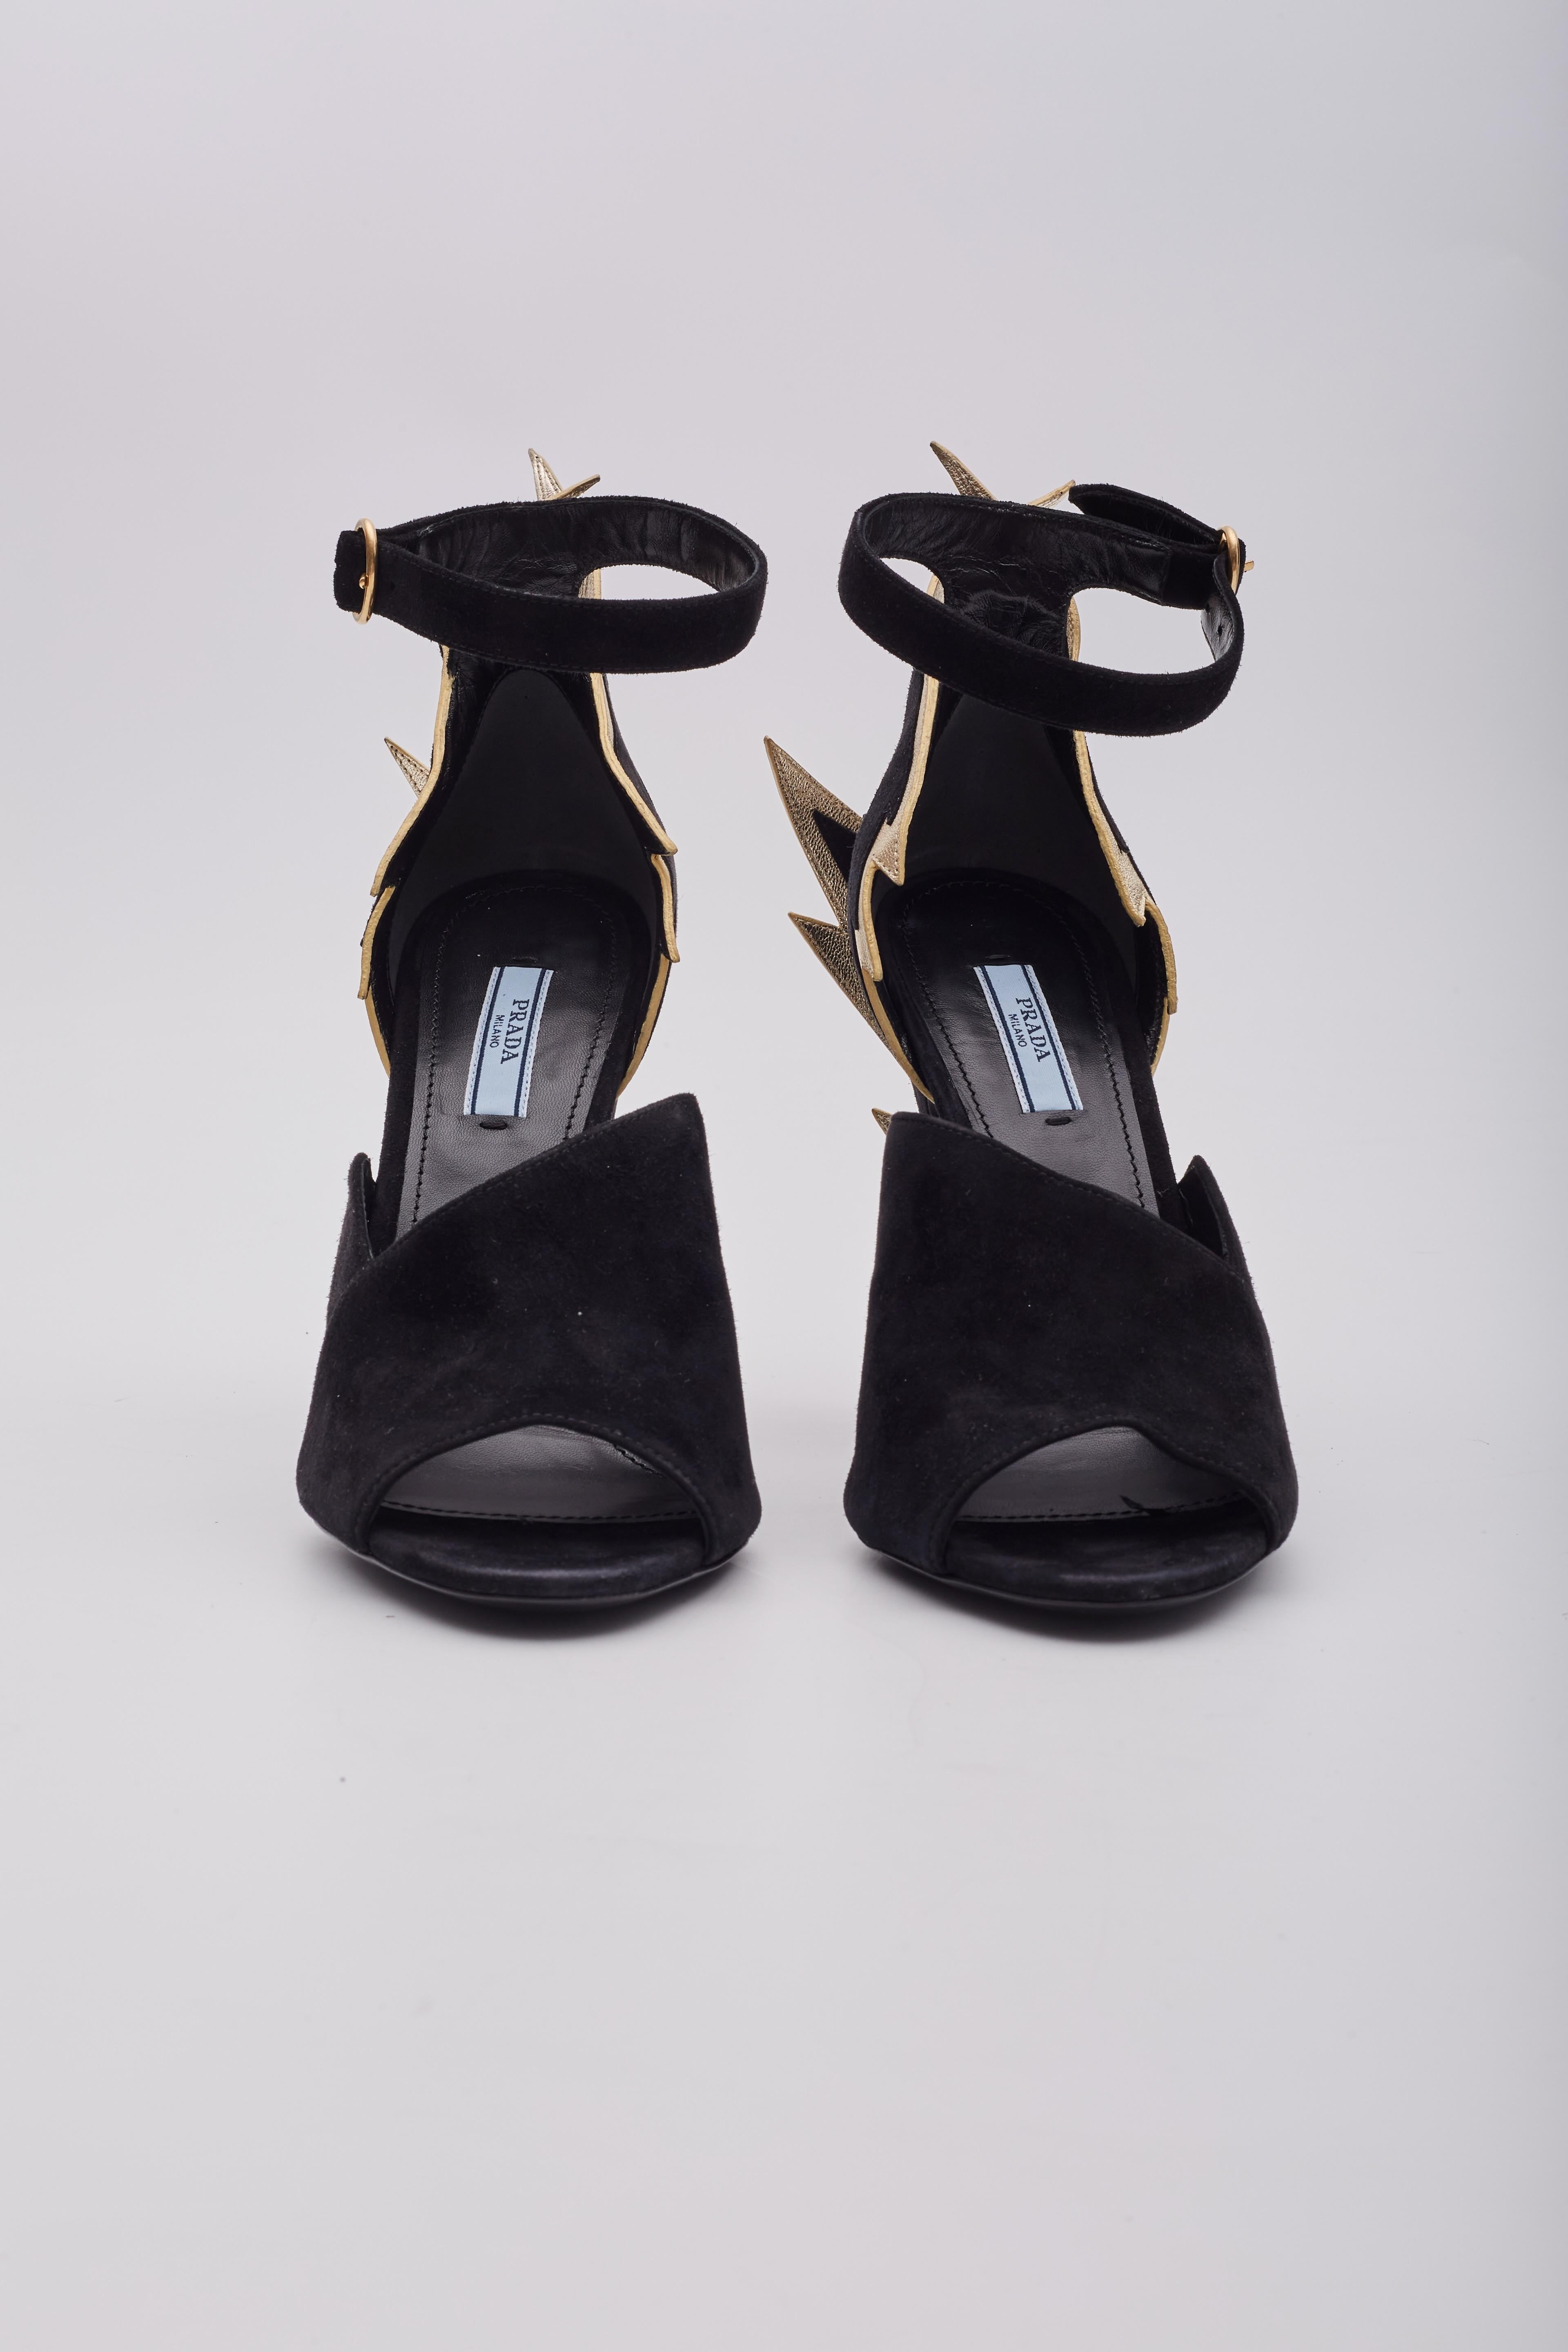 Prada Lightning Bolt Black Suede Gold Chunky Heels (EU 39) For Sale 1